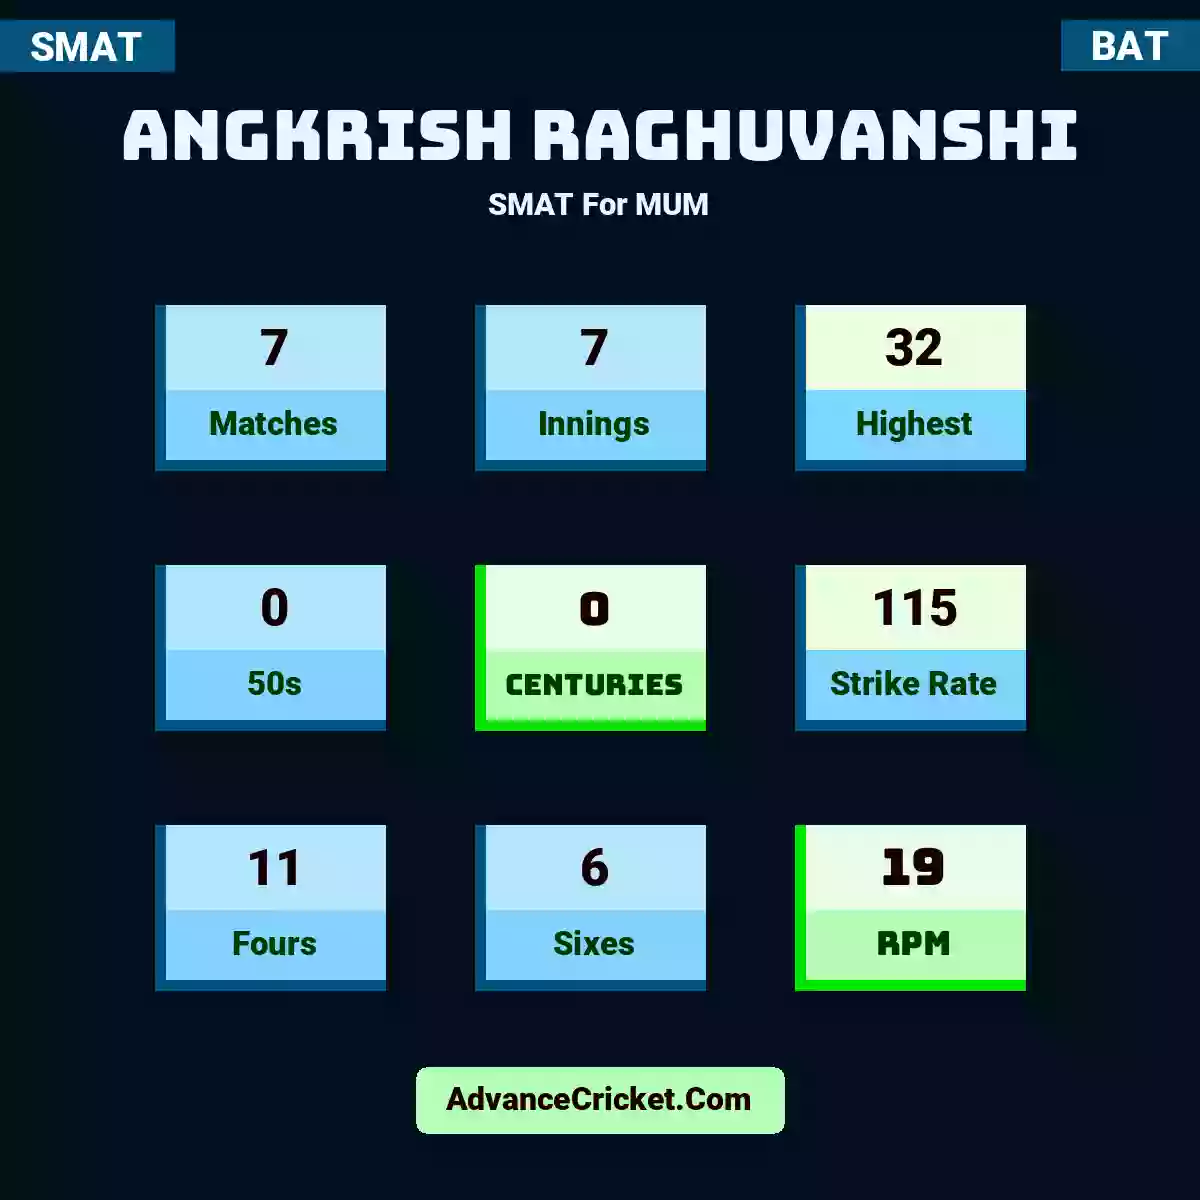 Angkrish Raghuvanshi SMAT  For MUM, Angkrish Raghuvanshi played 7 matches, scored 32 runs as highest, 0 half-centuries, and 0 centuries, with a strike rate of 115. A.Raghuvanshi hit 11 fours and 6 sixes, with an RPM of 19.